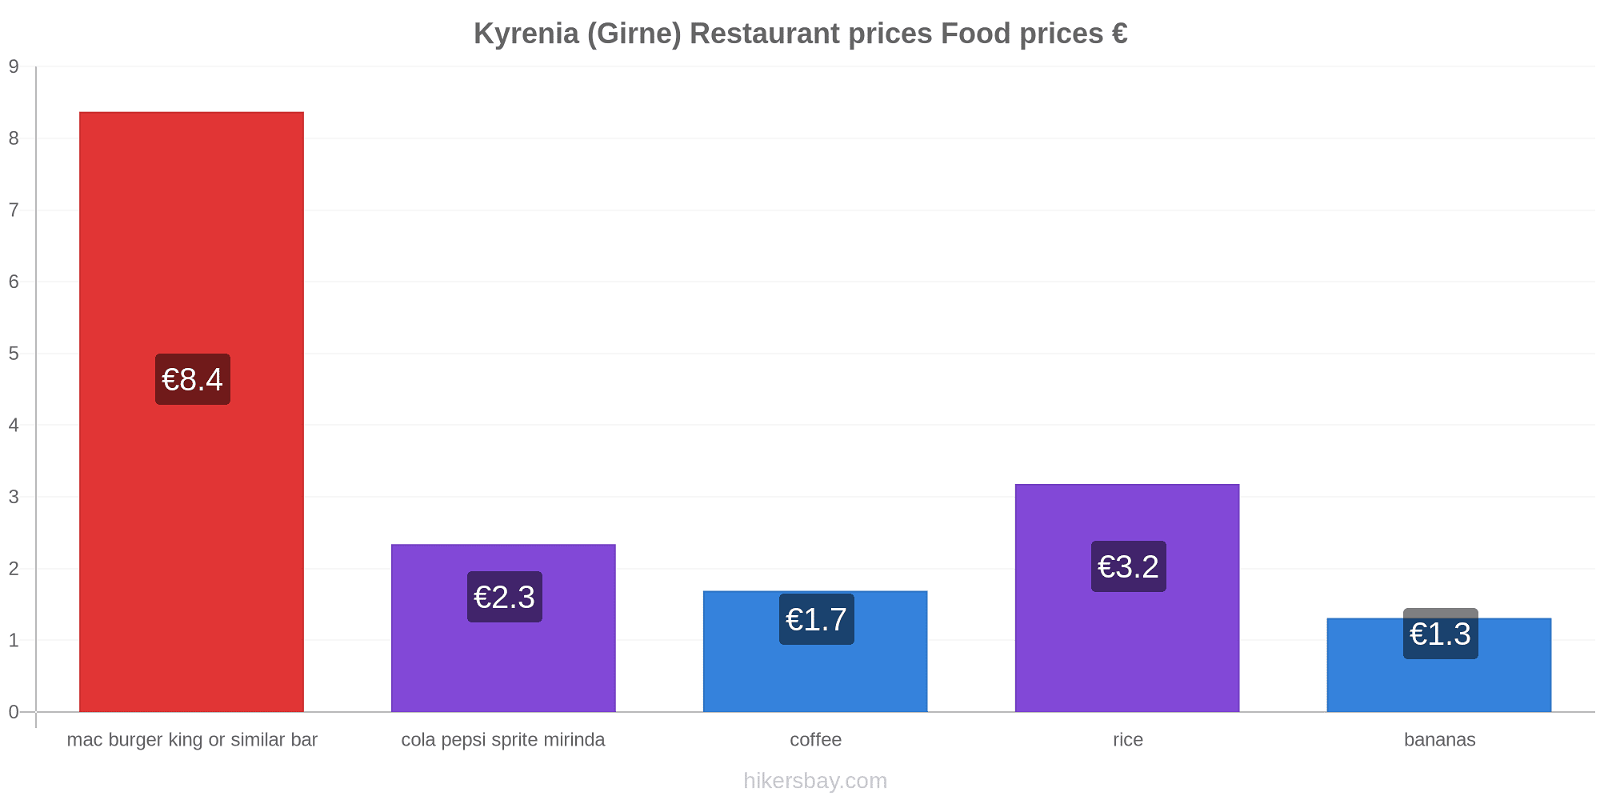 Kyrenia (Girne) price changes hikersbay.com